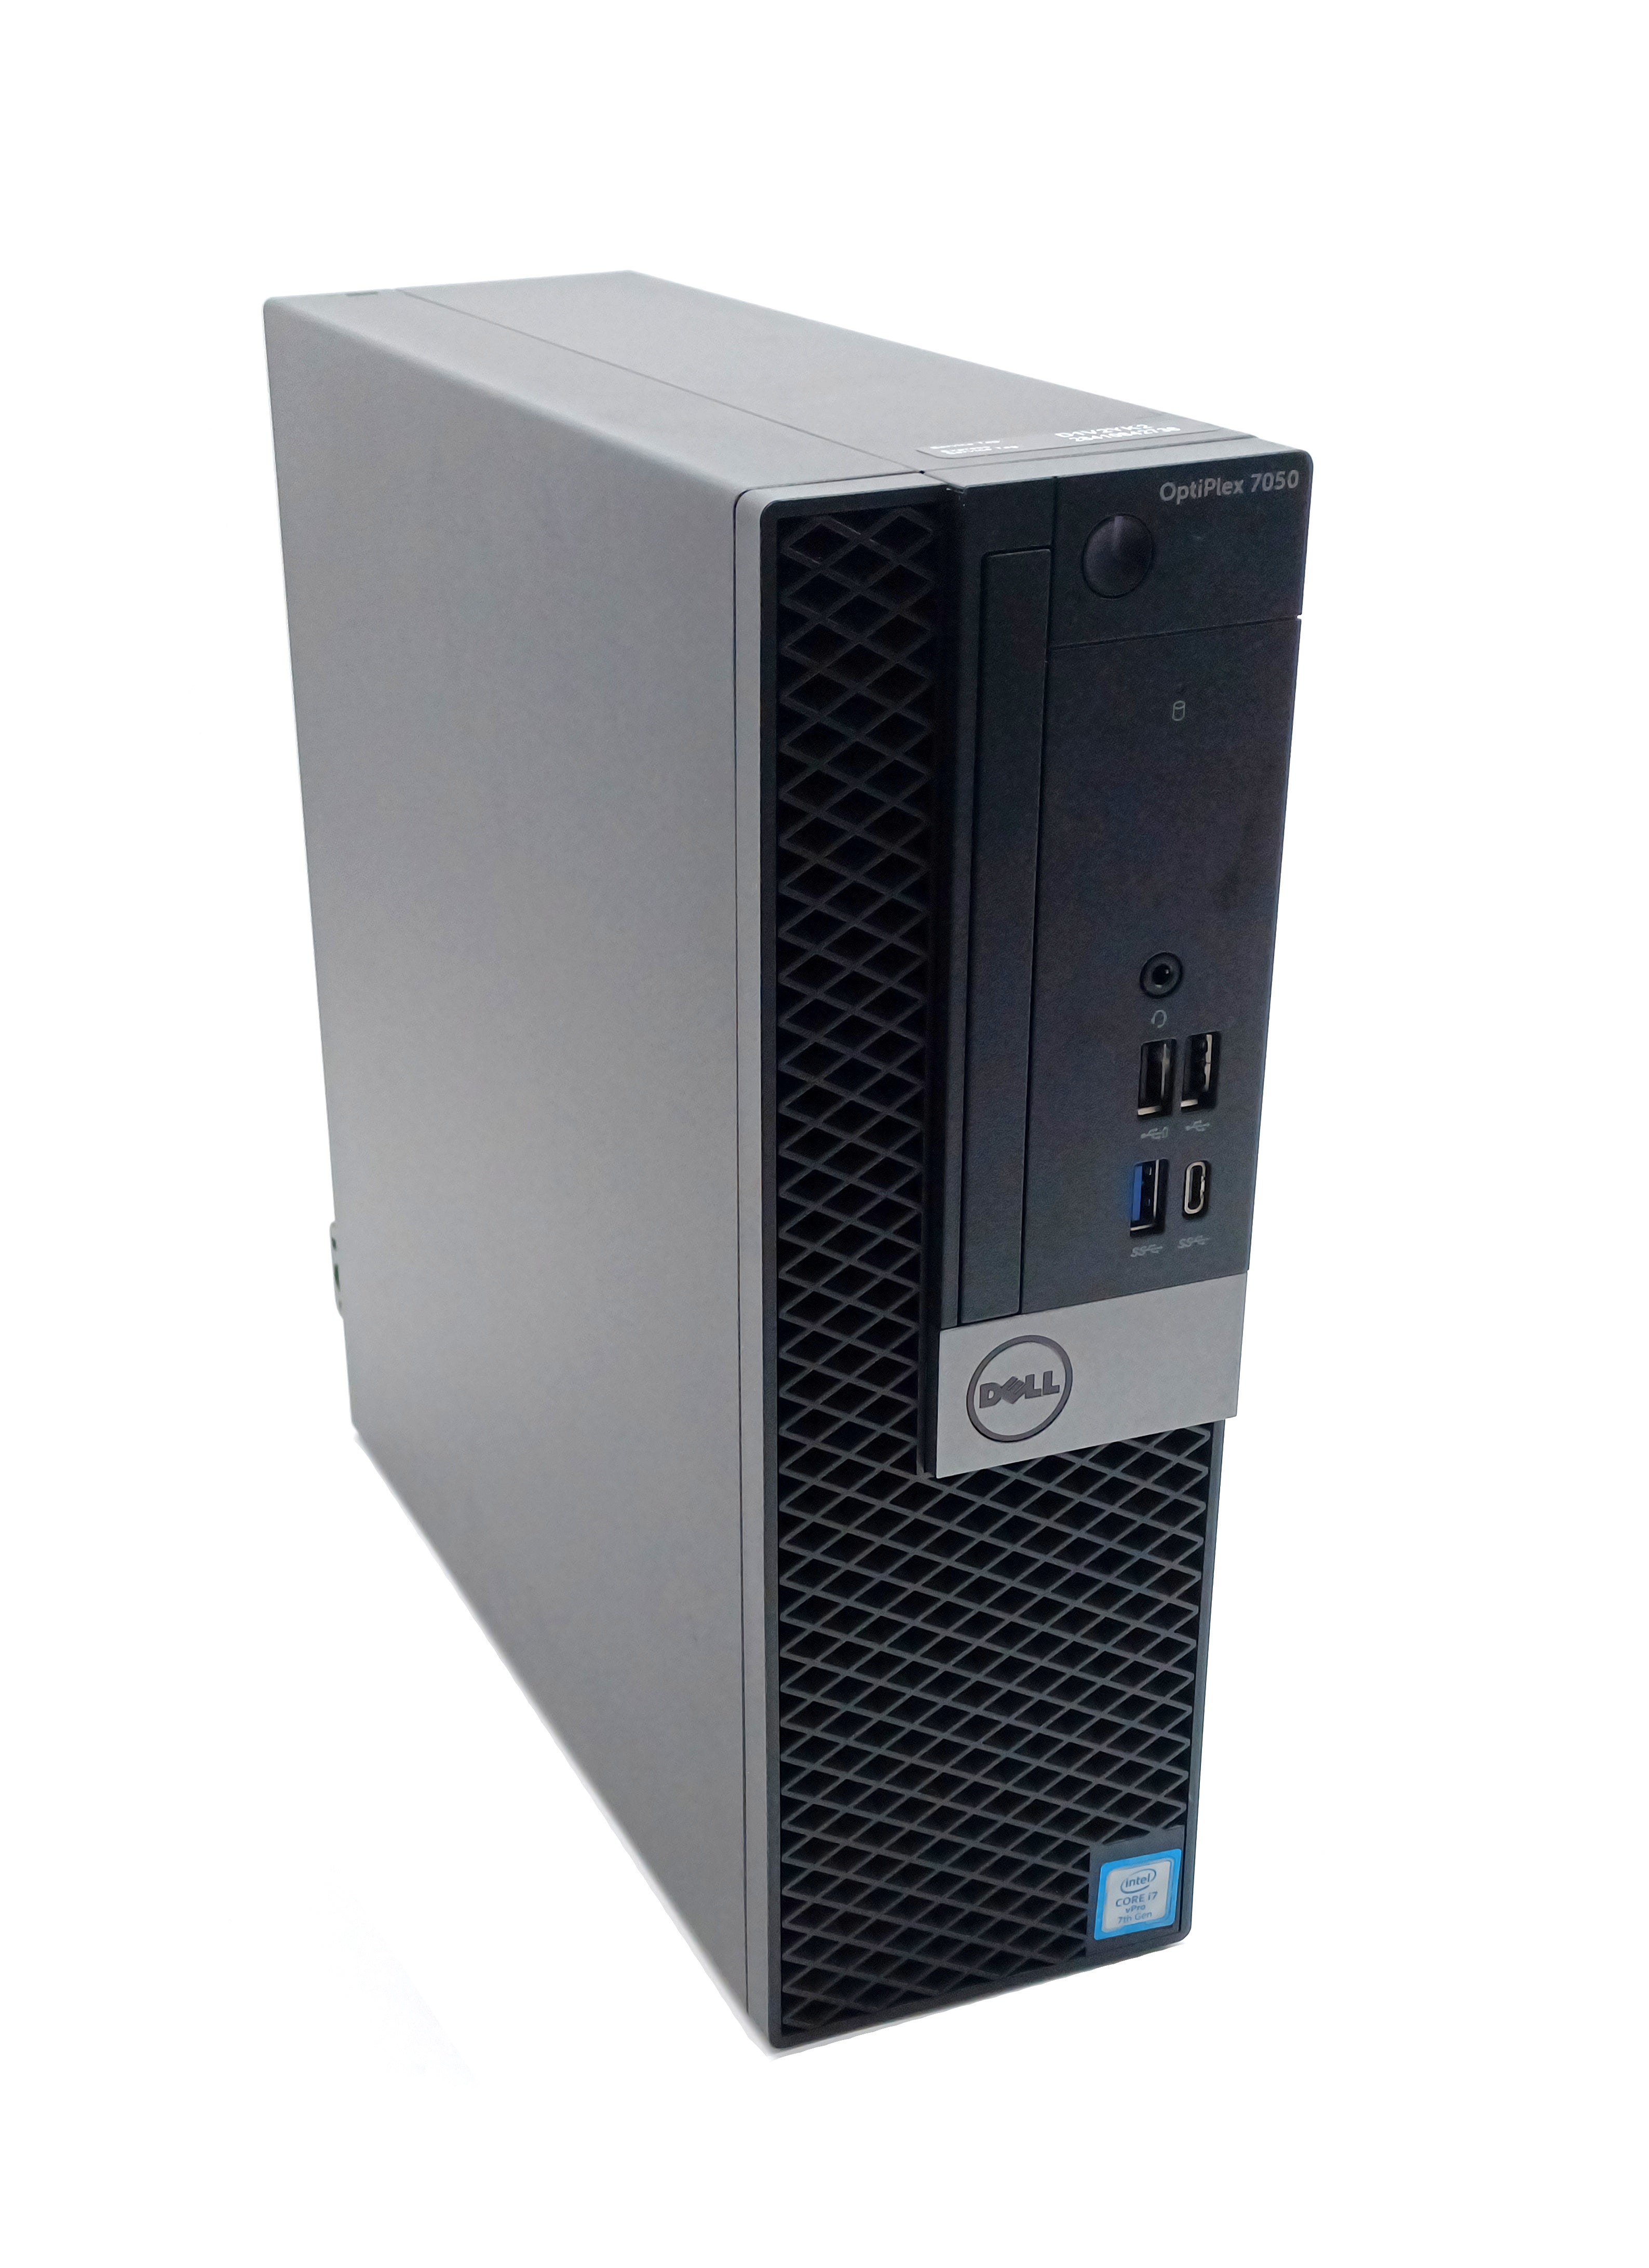 Dell OptiPlex 7050 SFF PC, Core i7 7th Gen, 16GB RAM, 256GB SSD